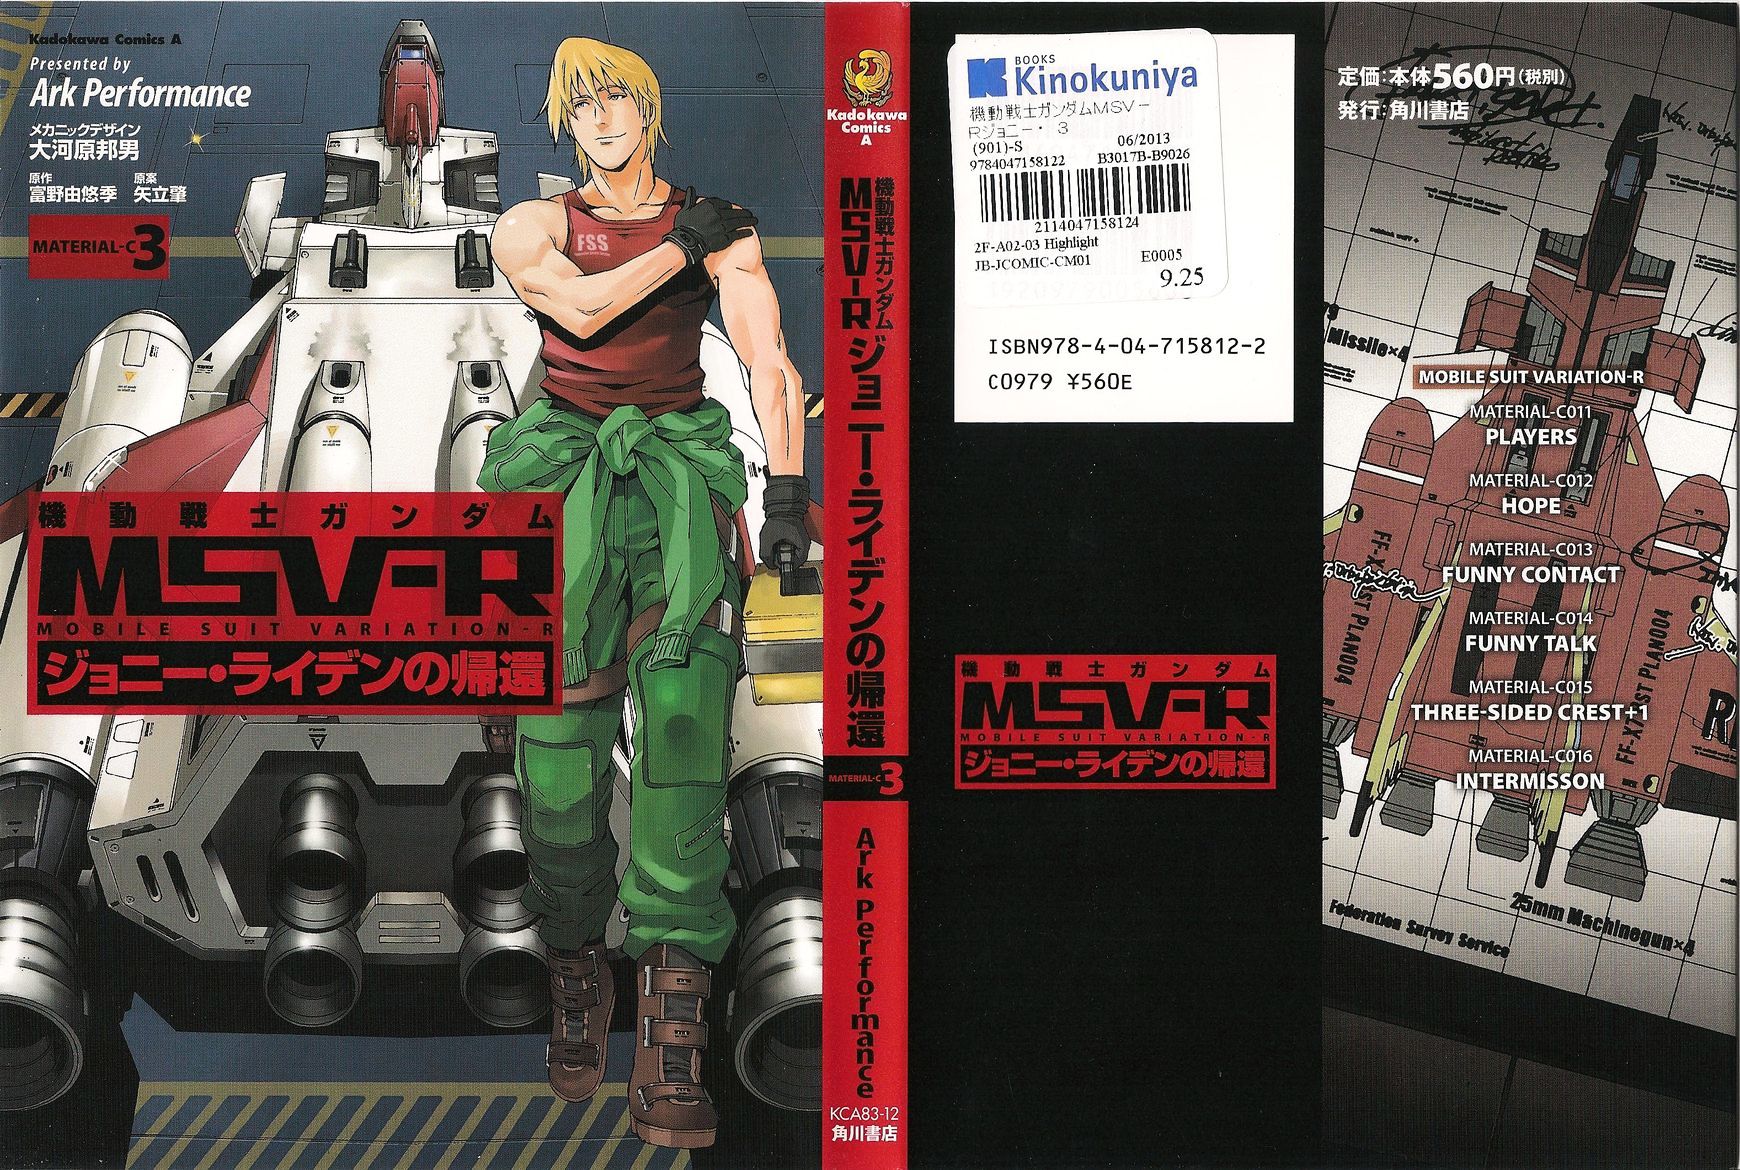 Kidou Senshi Gundam Msv-R: Johnny Ridden No Kikan Vol.1 Chapter 16 : Material - C016 [Intermission] - Picture 1